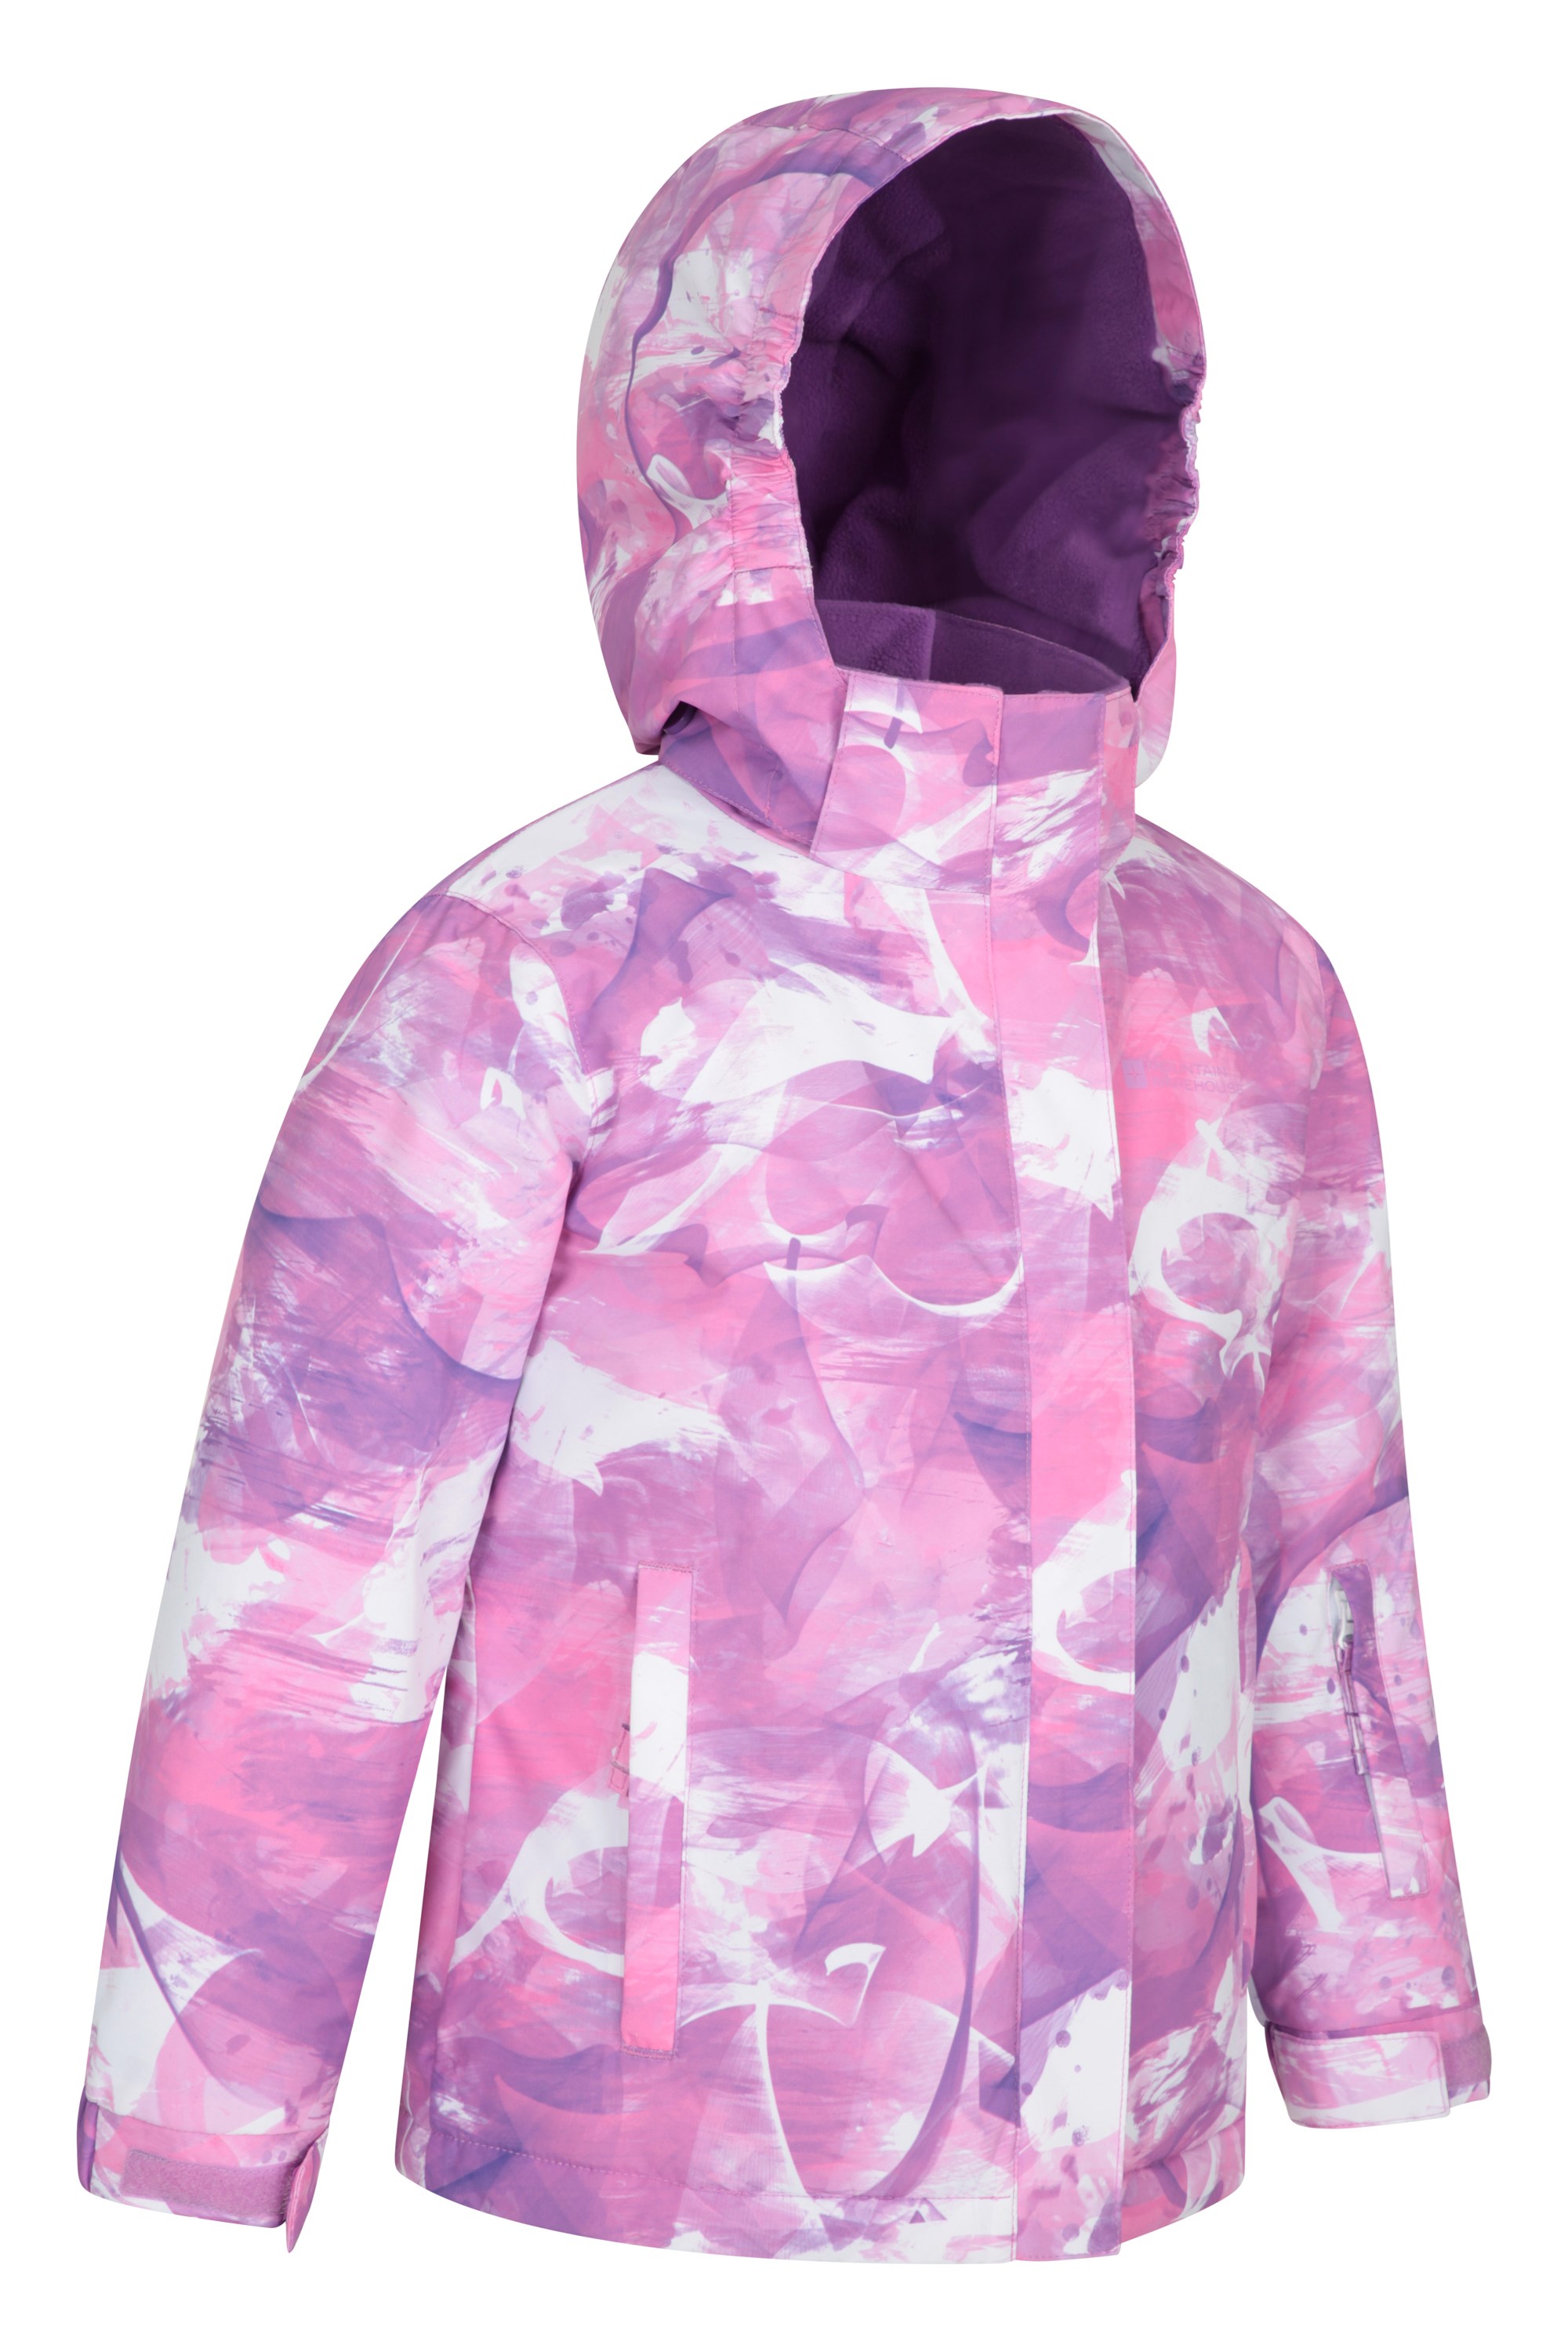 Mountain Warehouse Enchanted Kids Printed Ski Jacket Winter Coat 